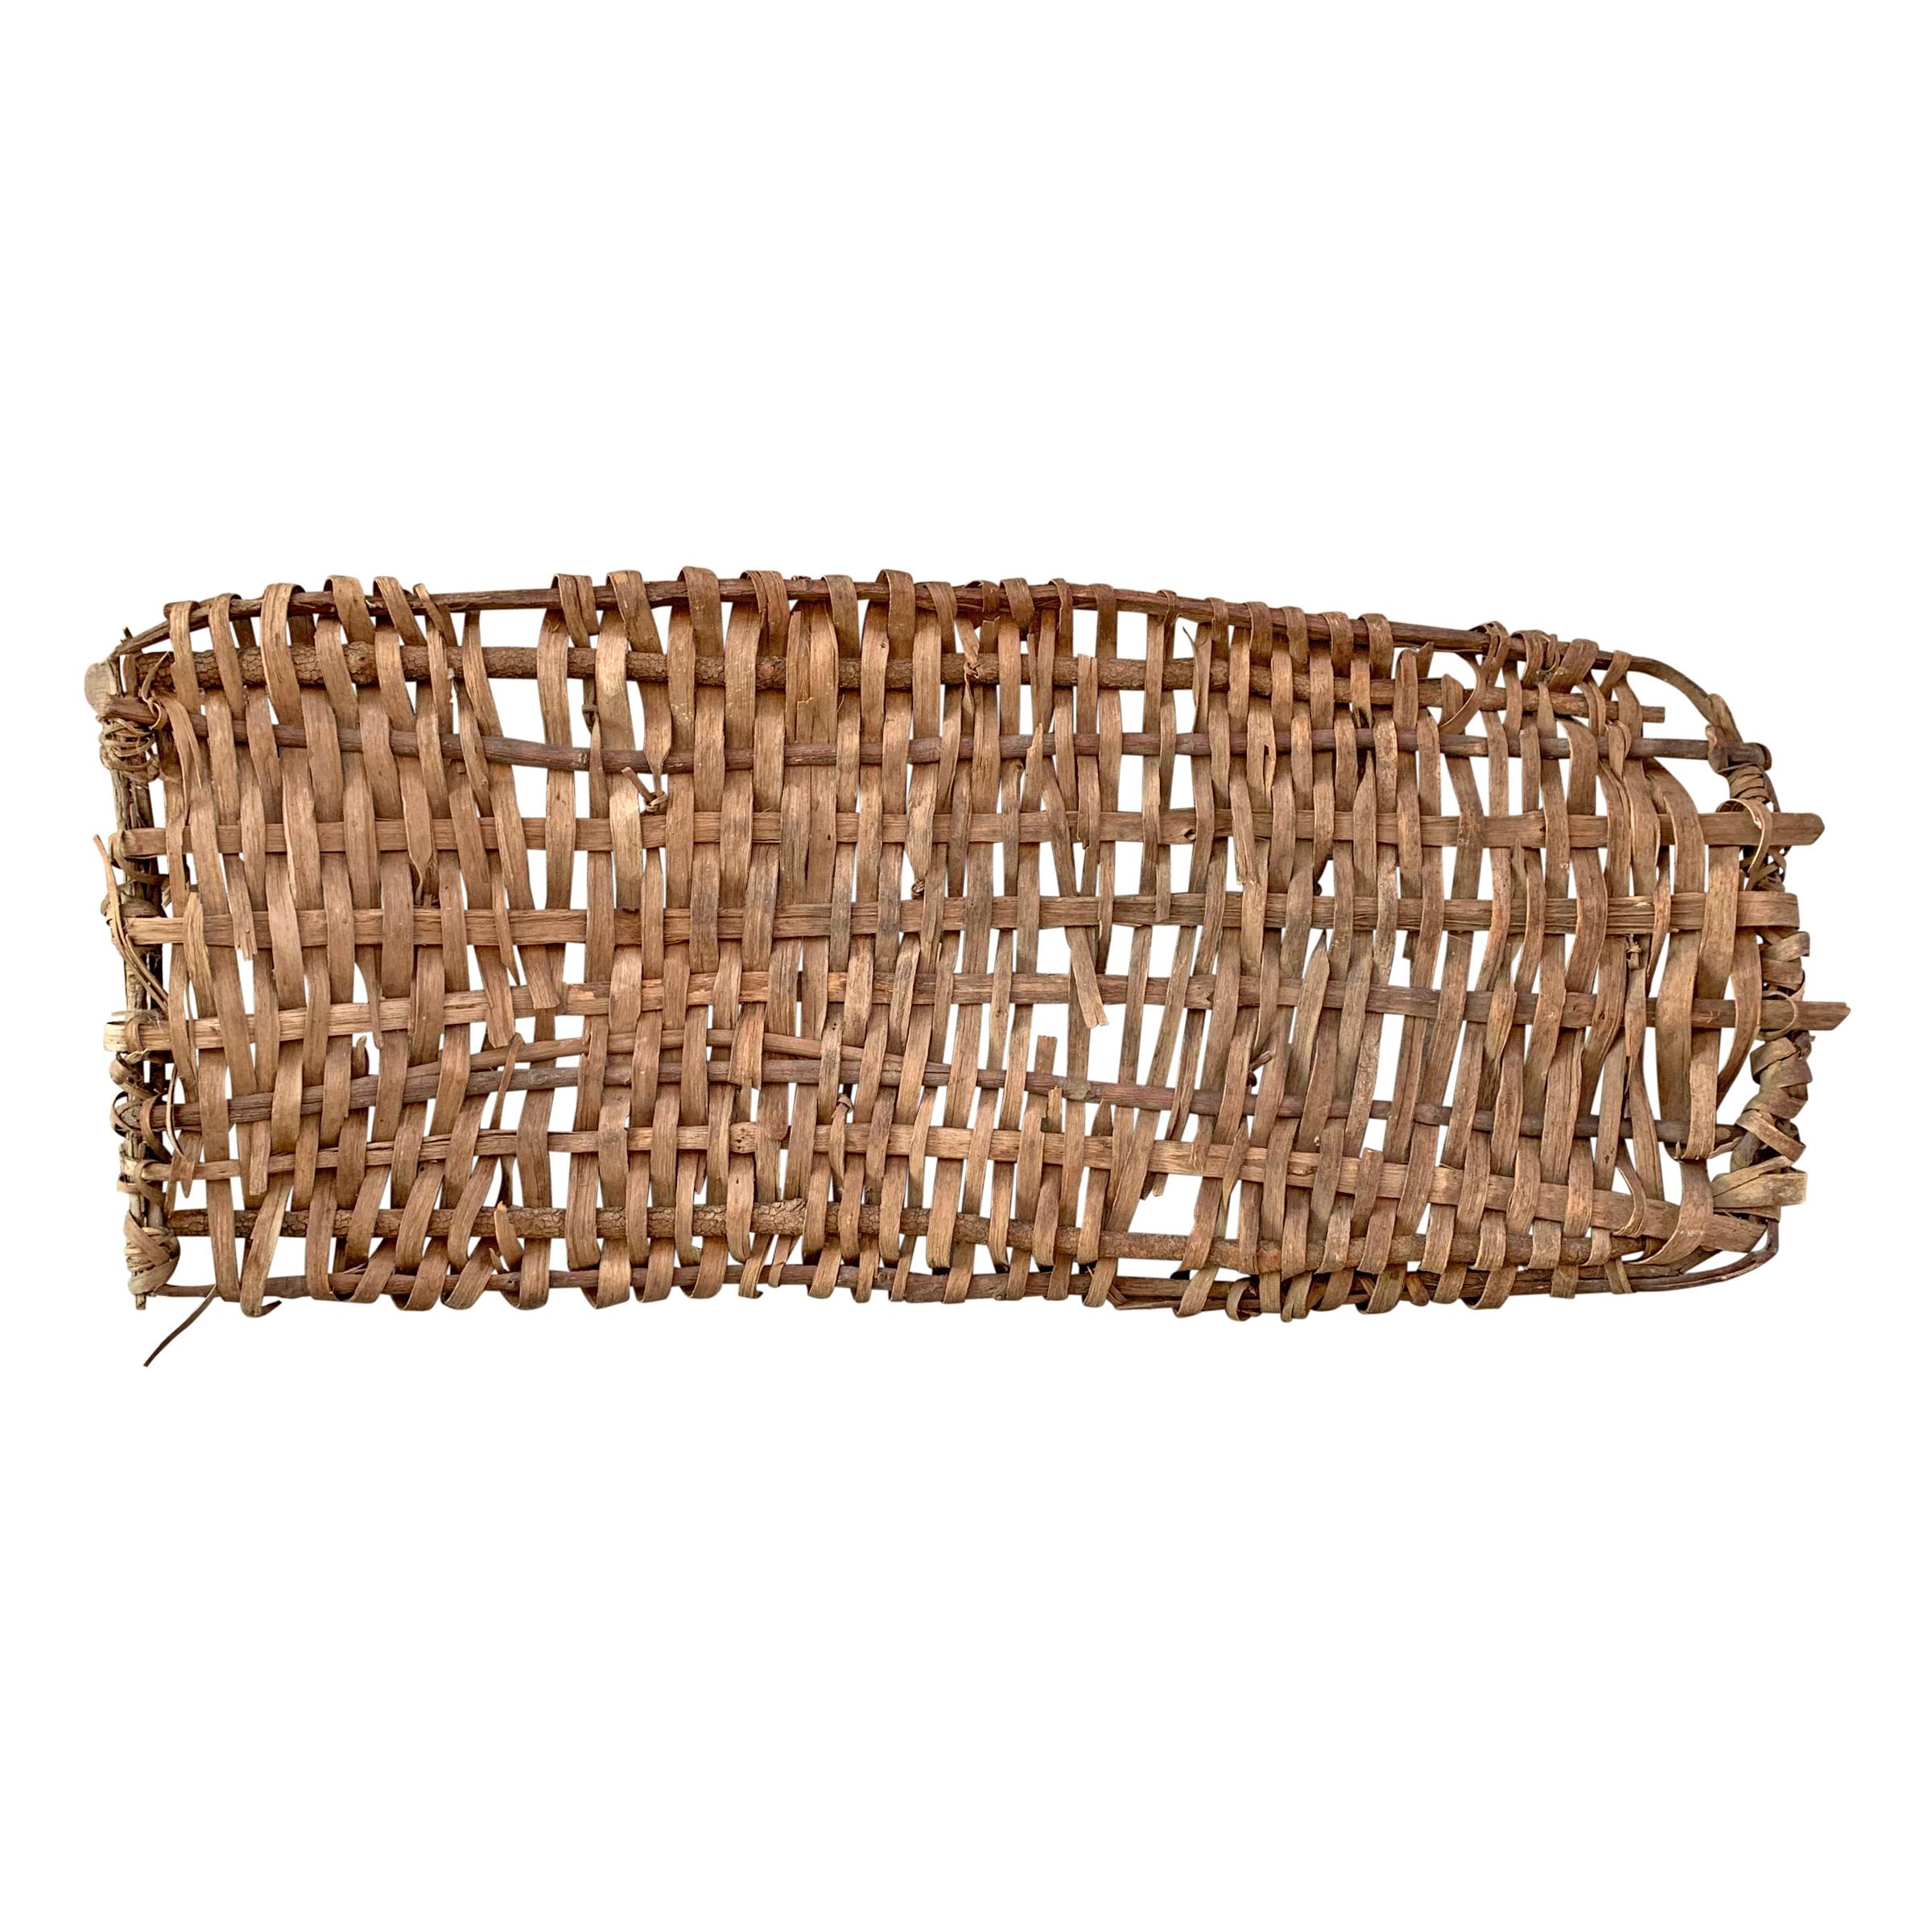 19th Century American Drying Basket